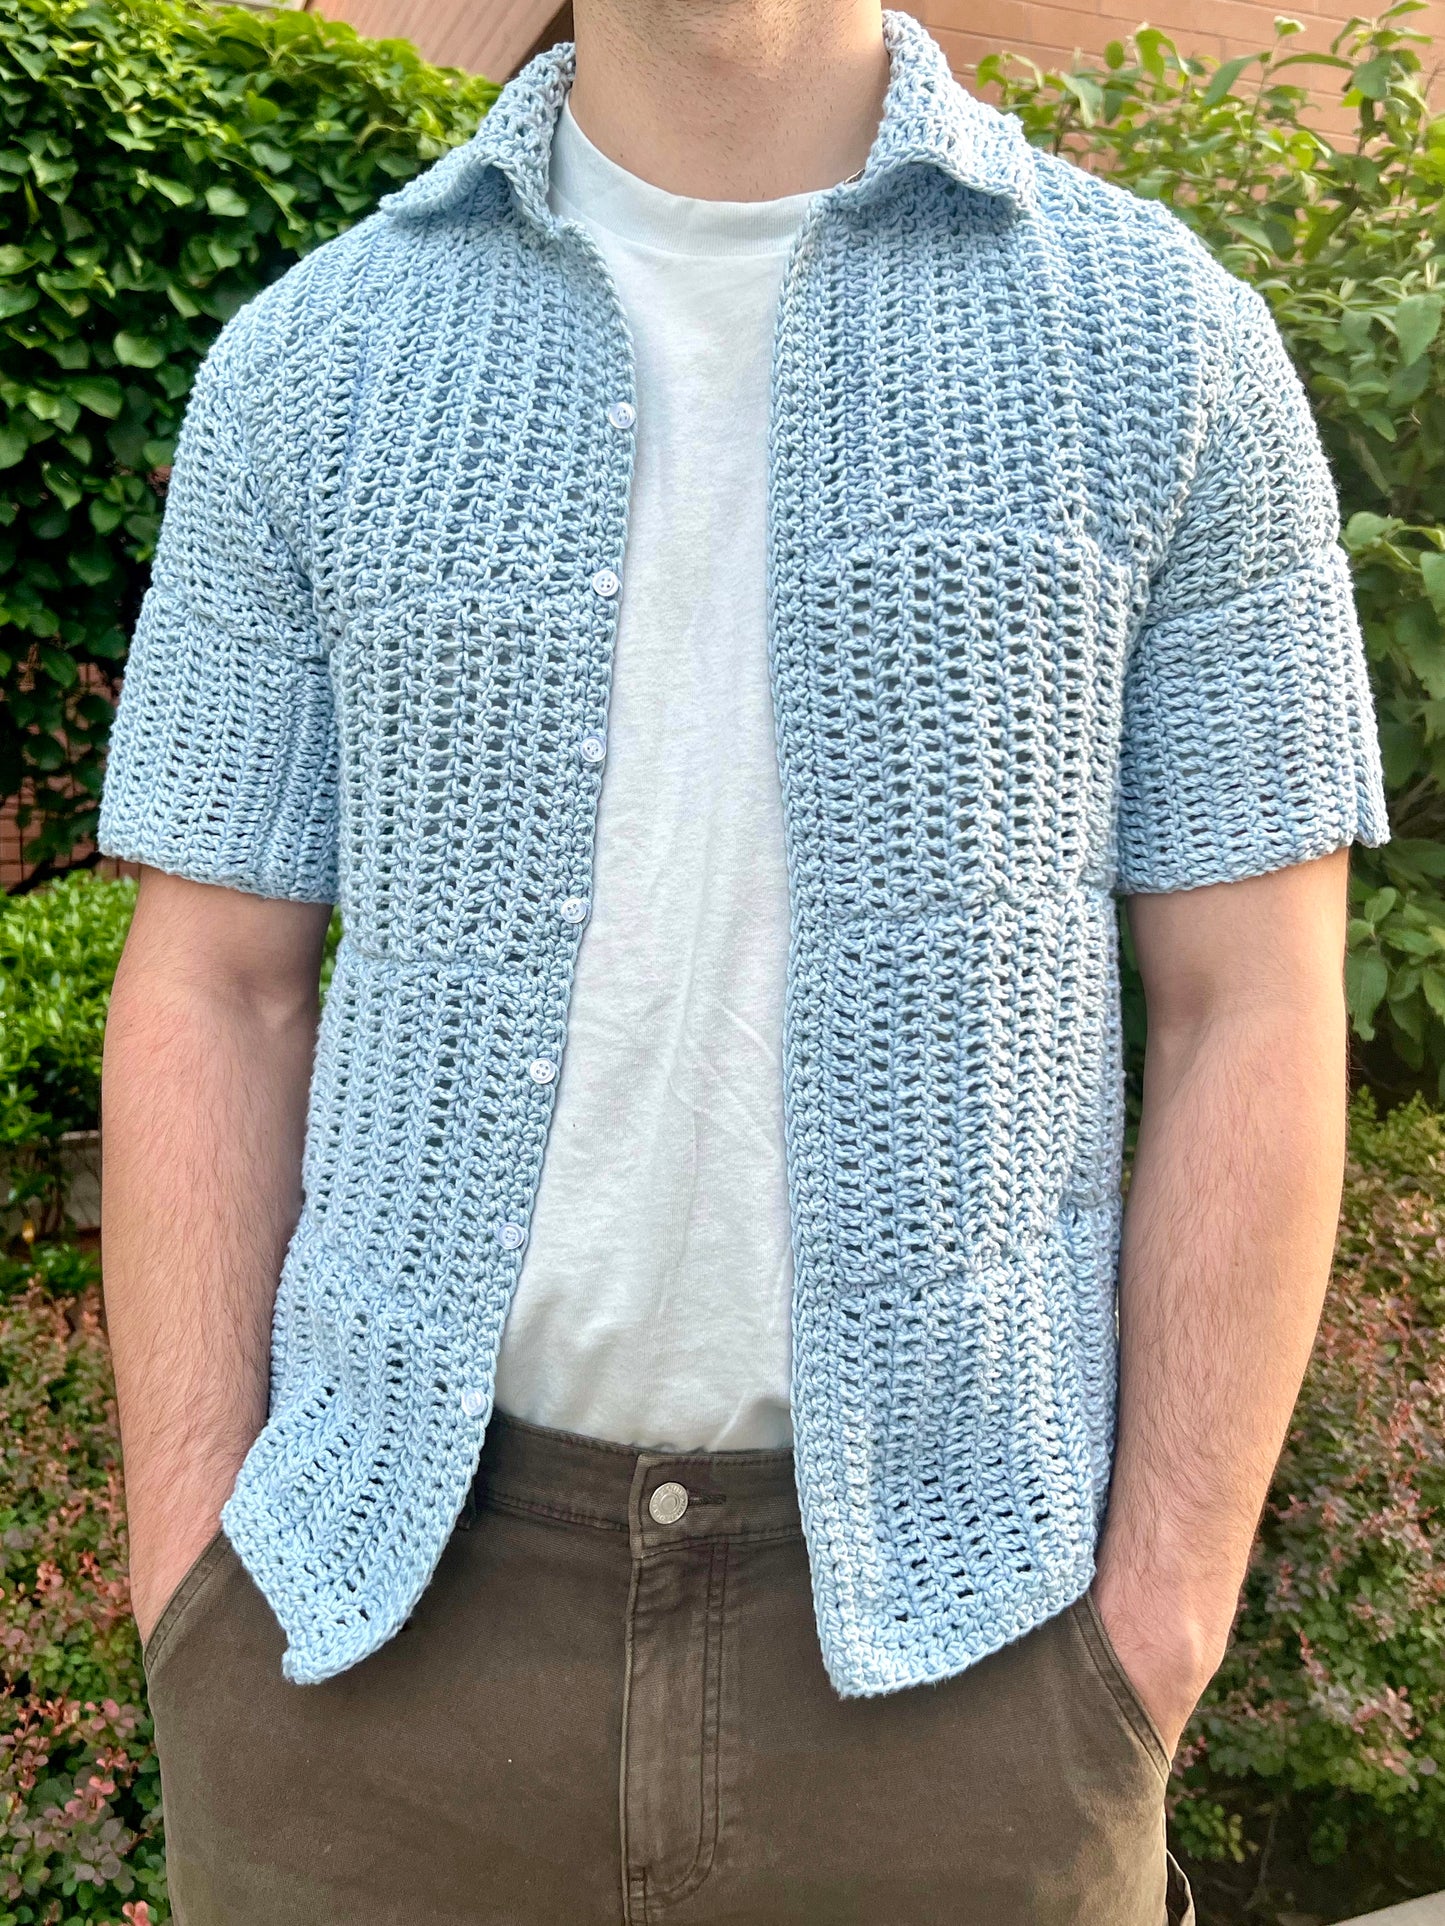 Essex Top Crochet Pattern